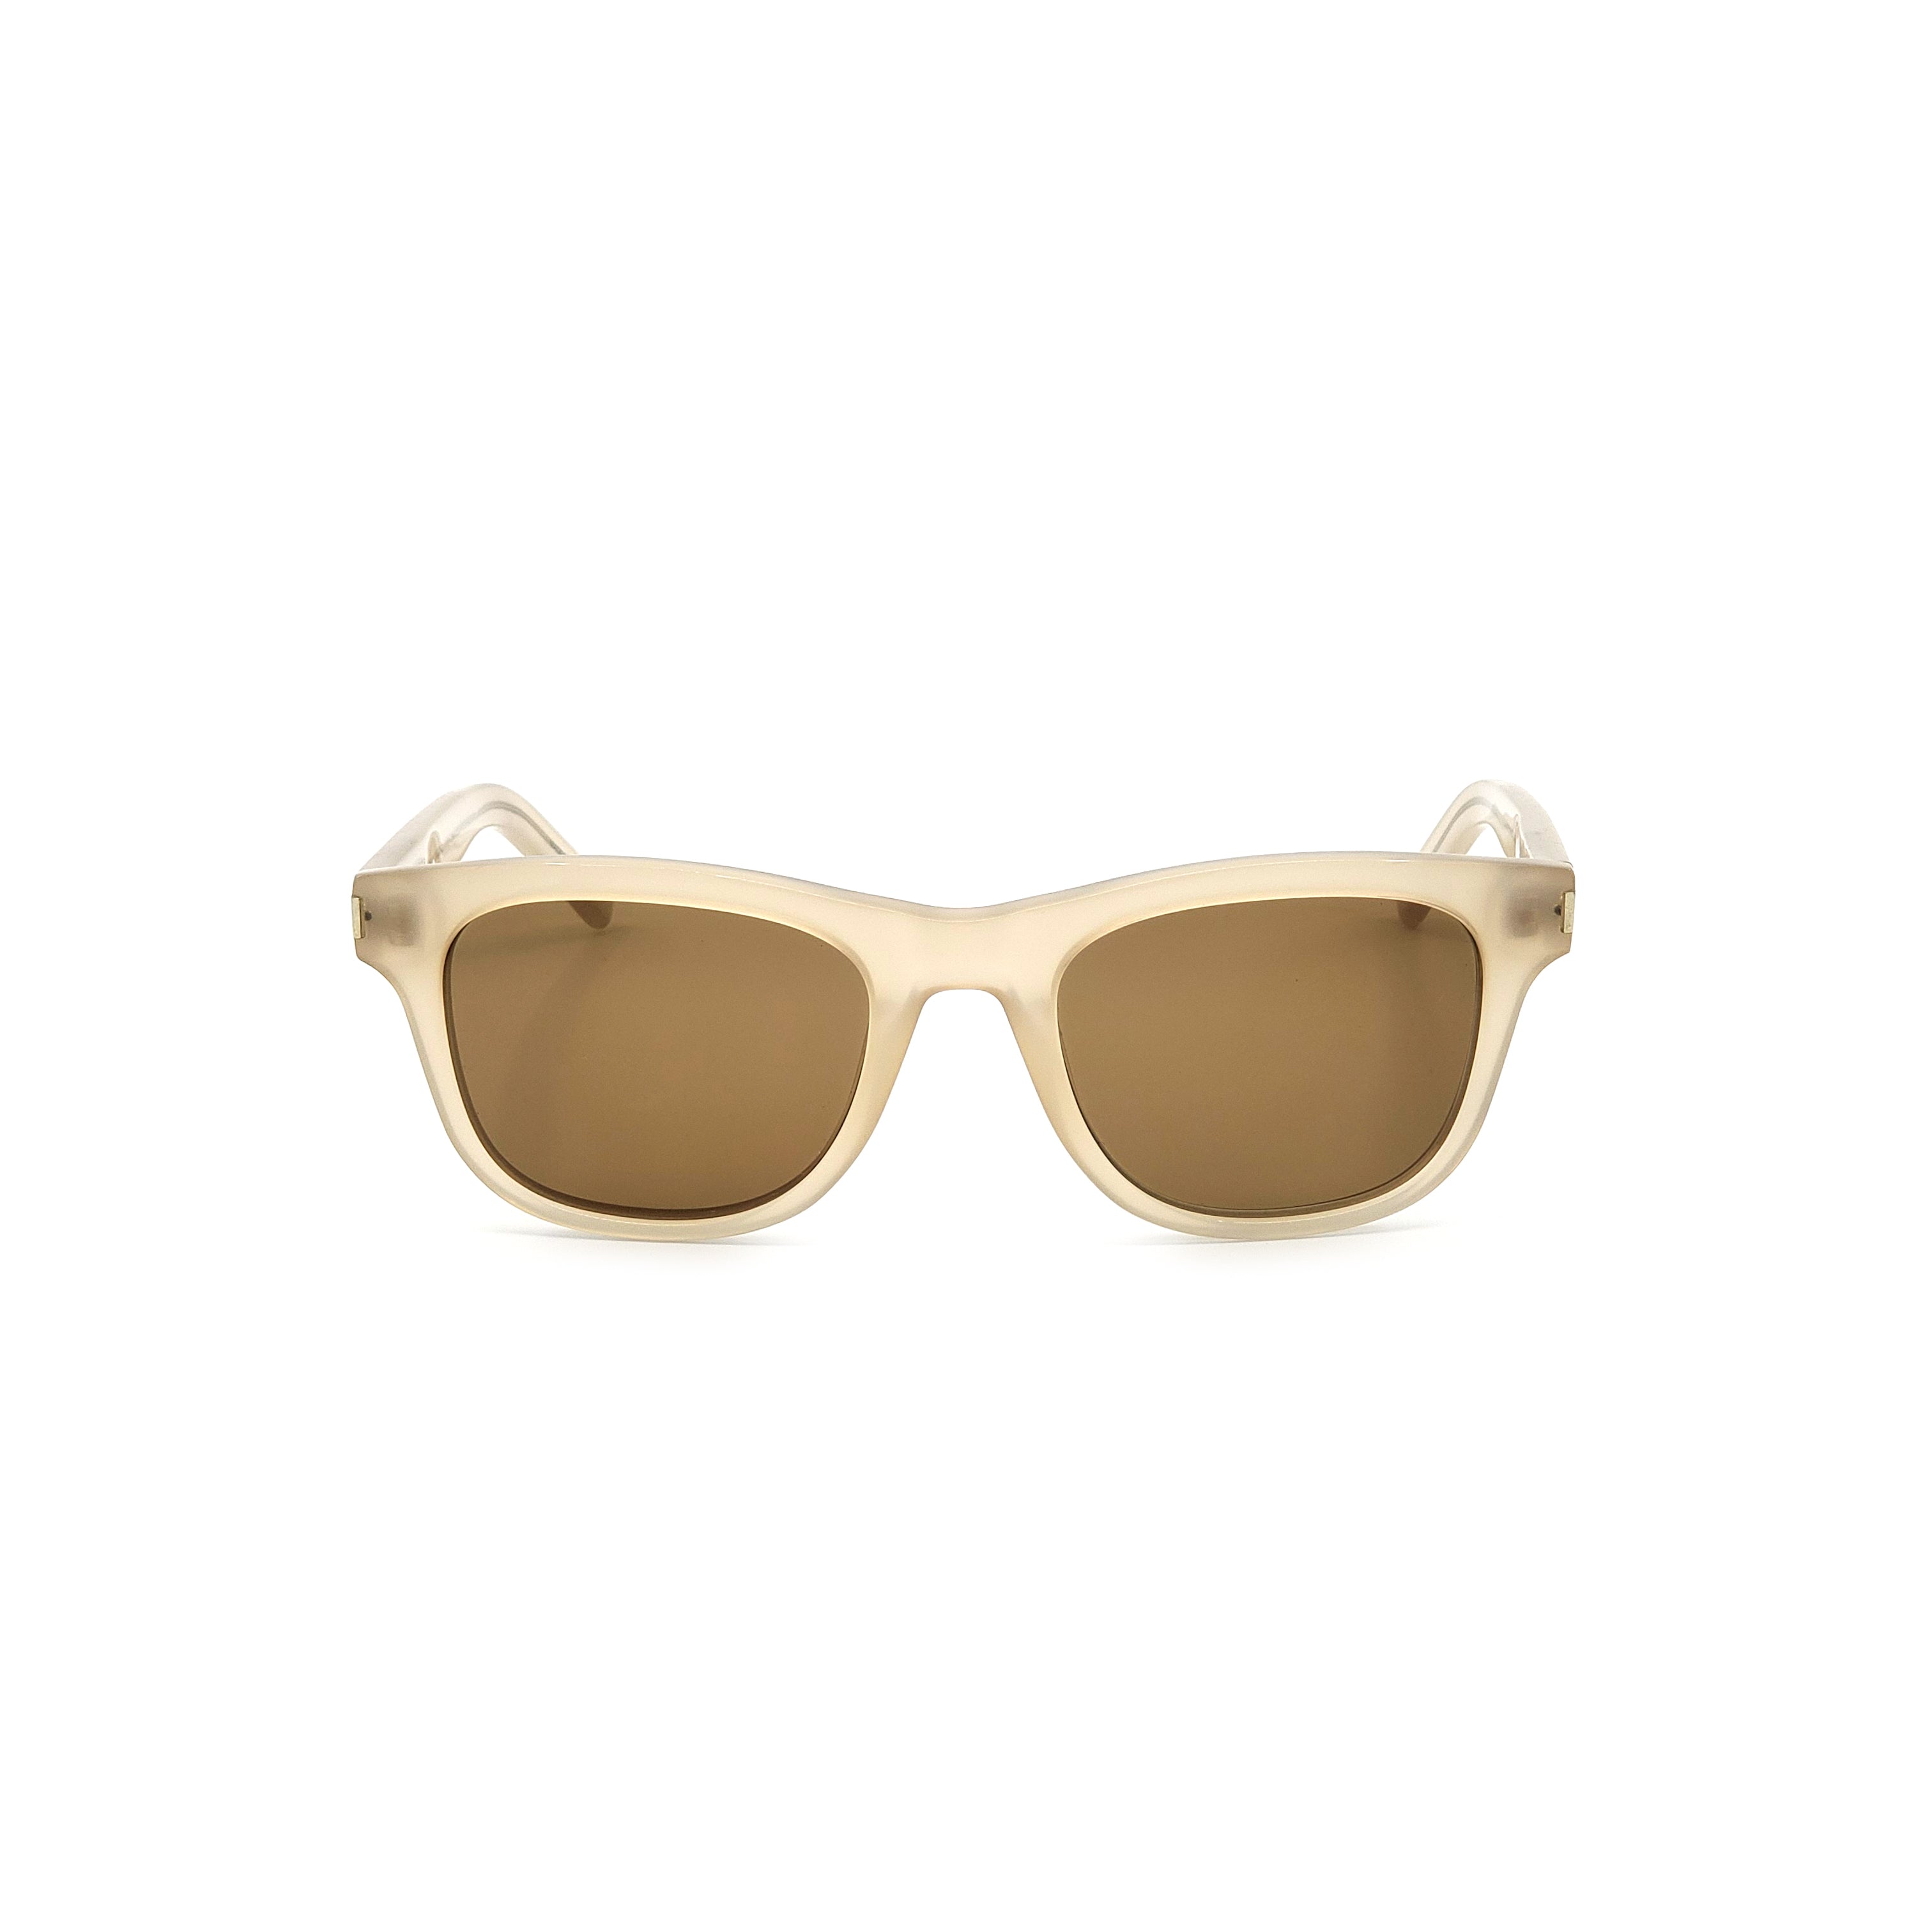 Yves Saint Laurent Classic 2 Sunglasses - YSL12E5V